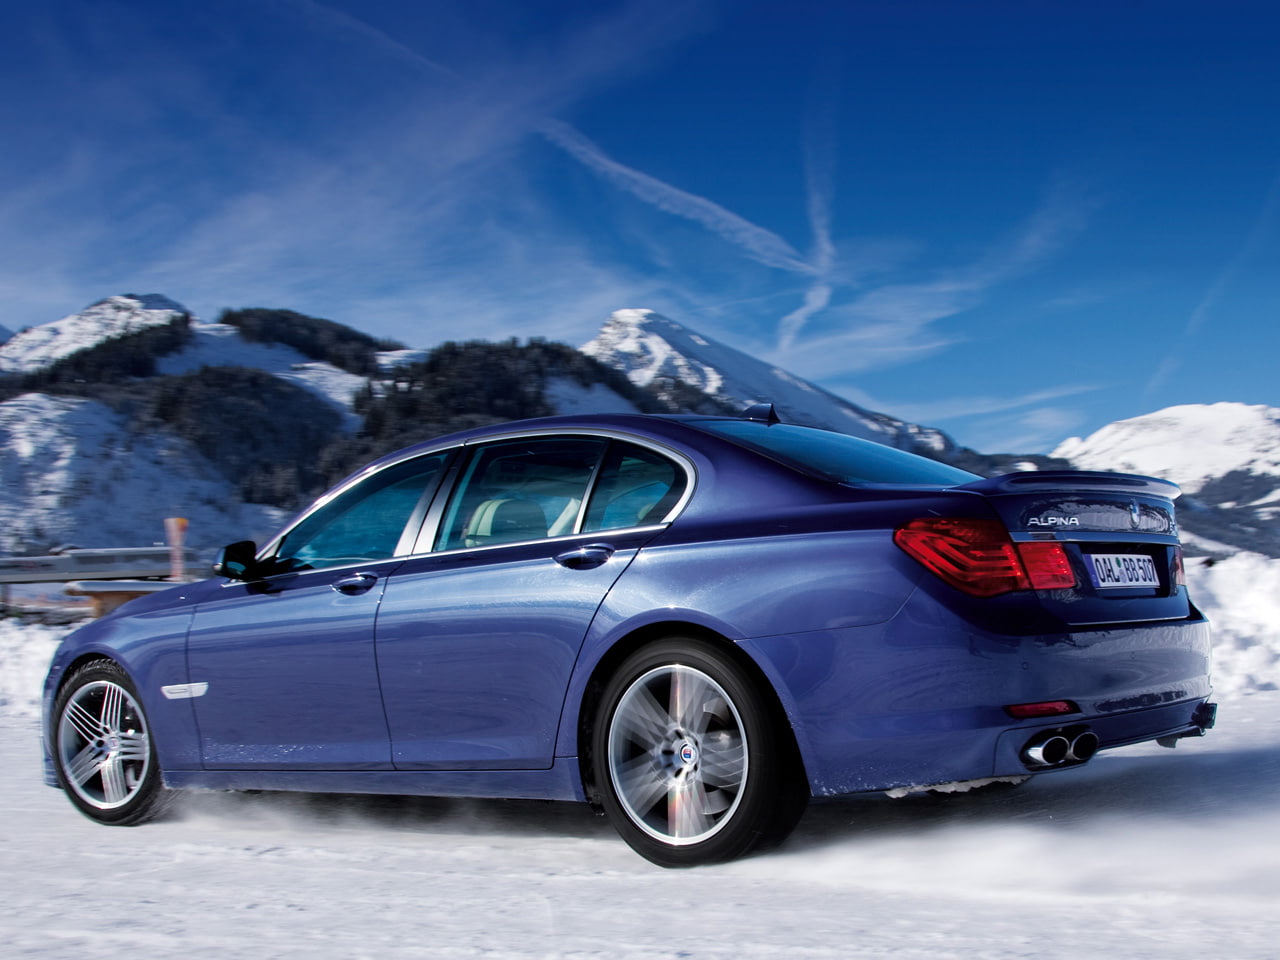 BMW Alpina B7, bmw_alpina b7 biturbo sedan, car, winter, snow